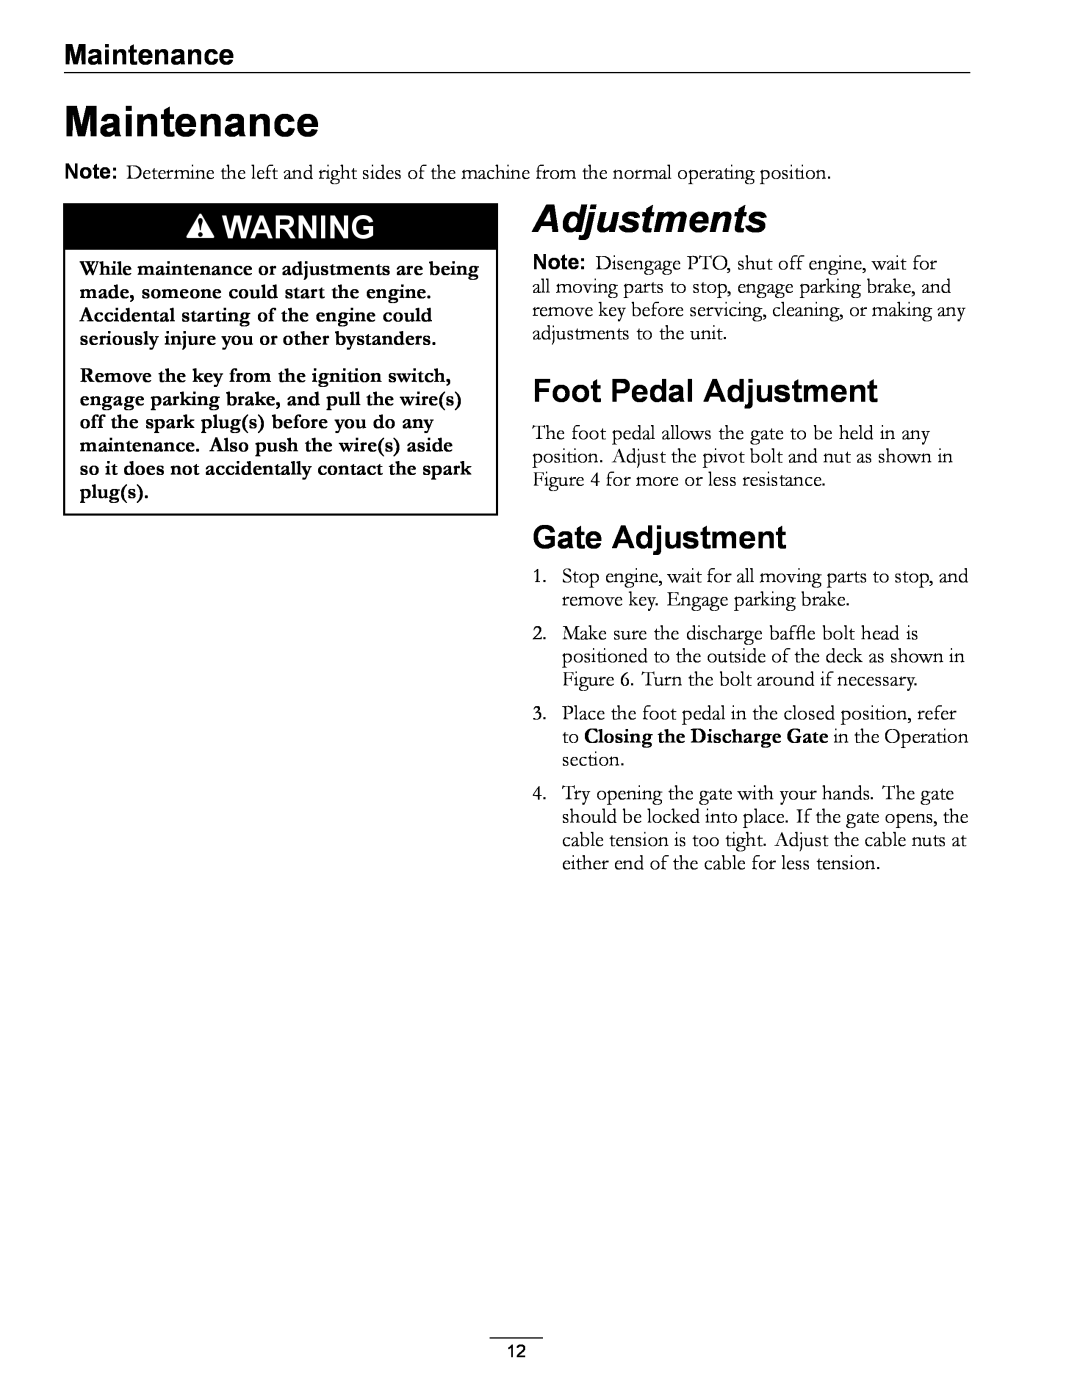 Exmark OCD02 manual Maintenance, Foot Pedal Adjustment, Gate Adjustment, Adjustments 